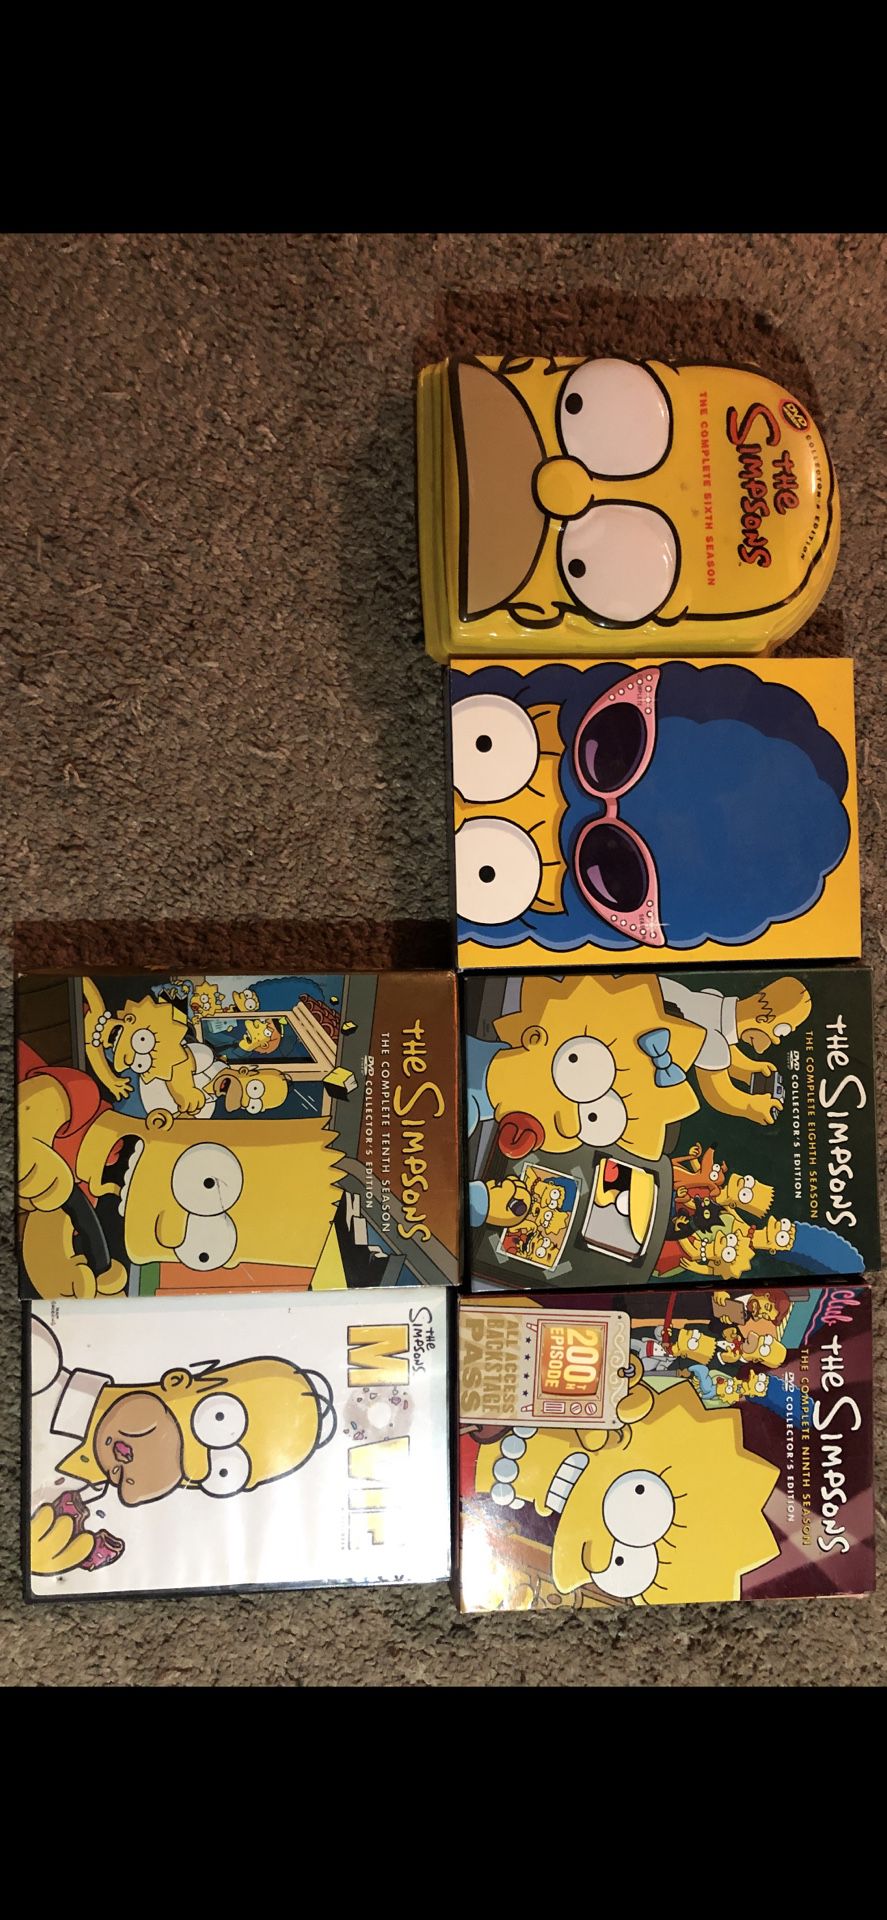 The Simpsons season 6-10